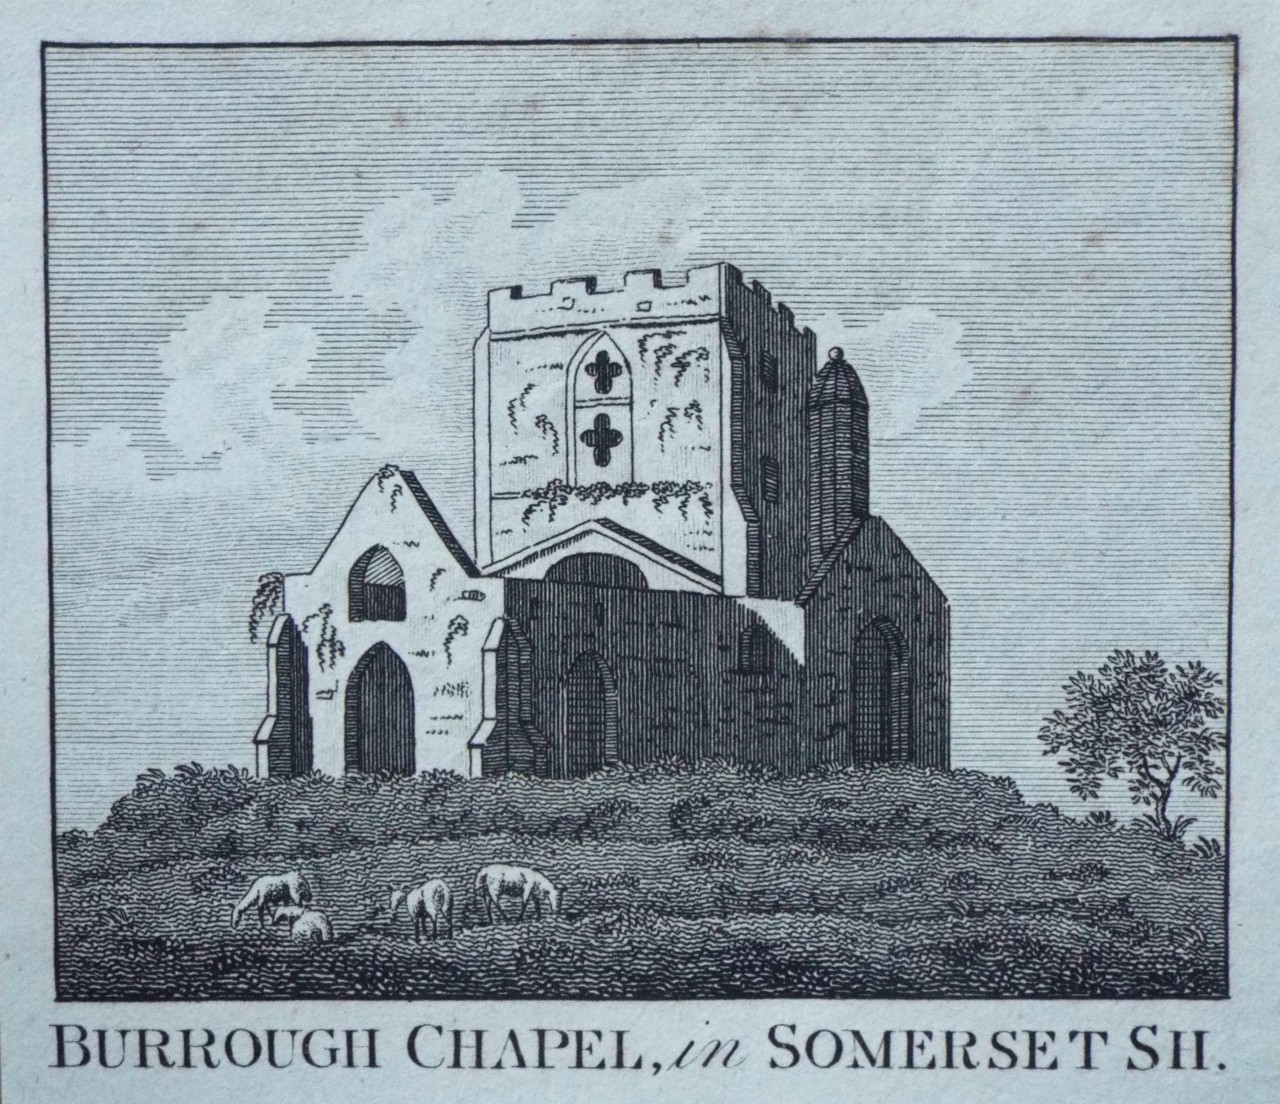 Print - Burrough Chapel, in Somerset Sh.